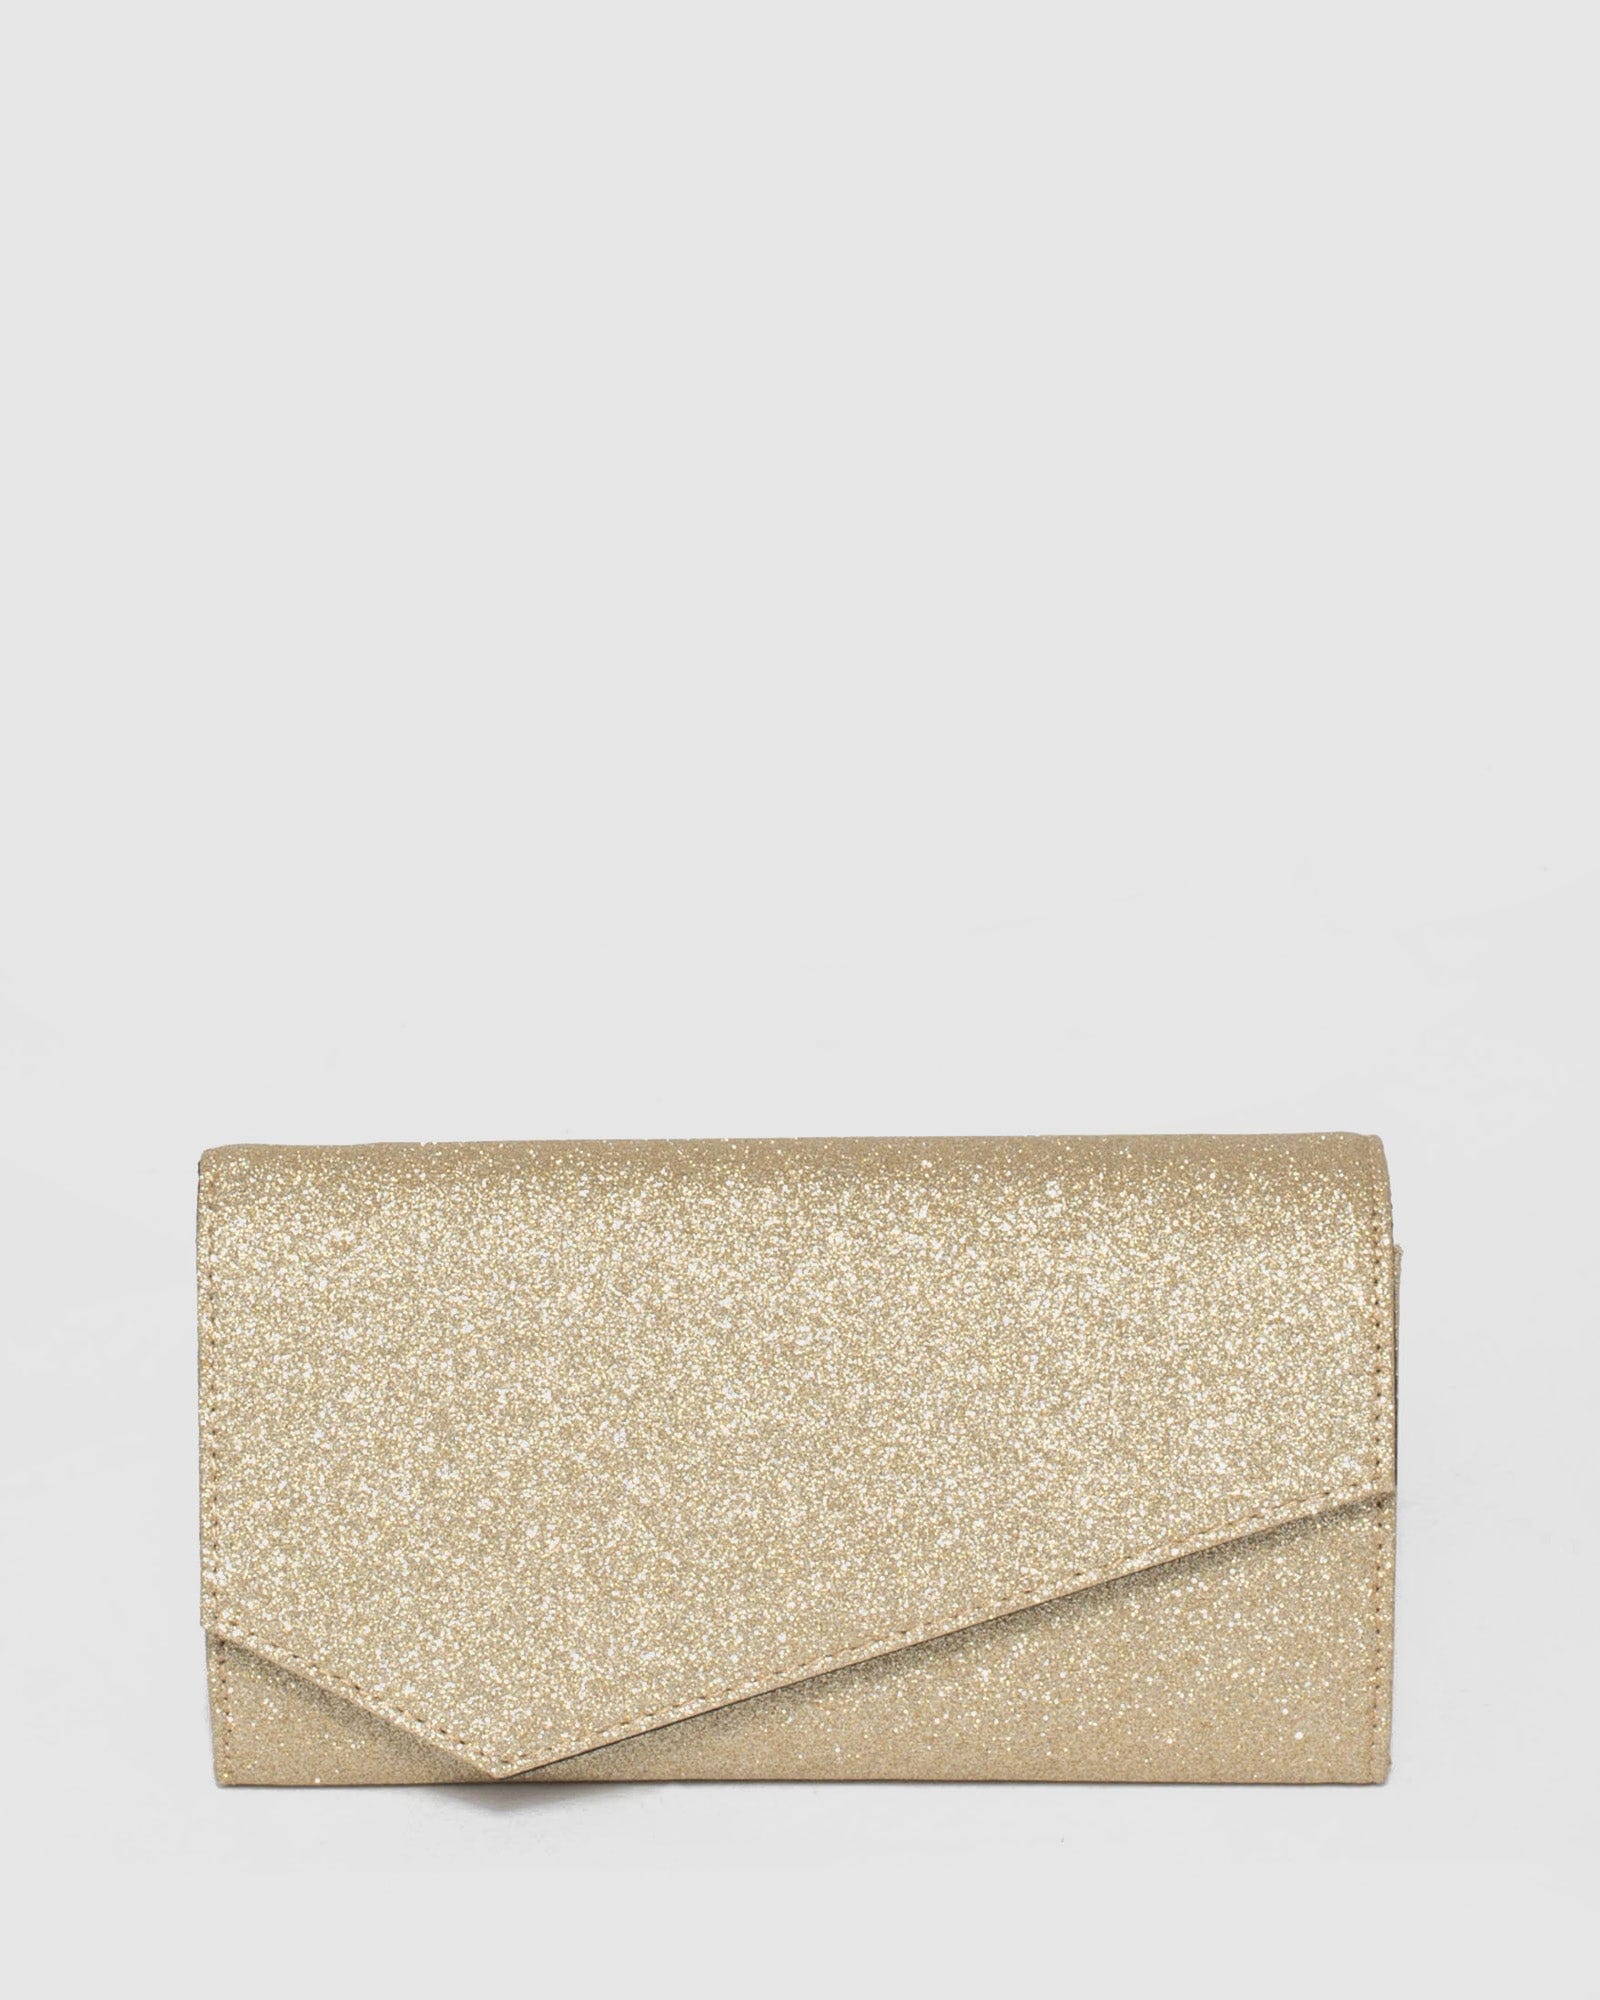 Jordan Gold Clutch Bag – colette by colette hayman